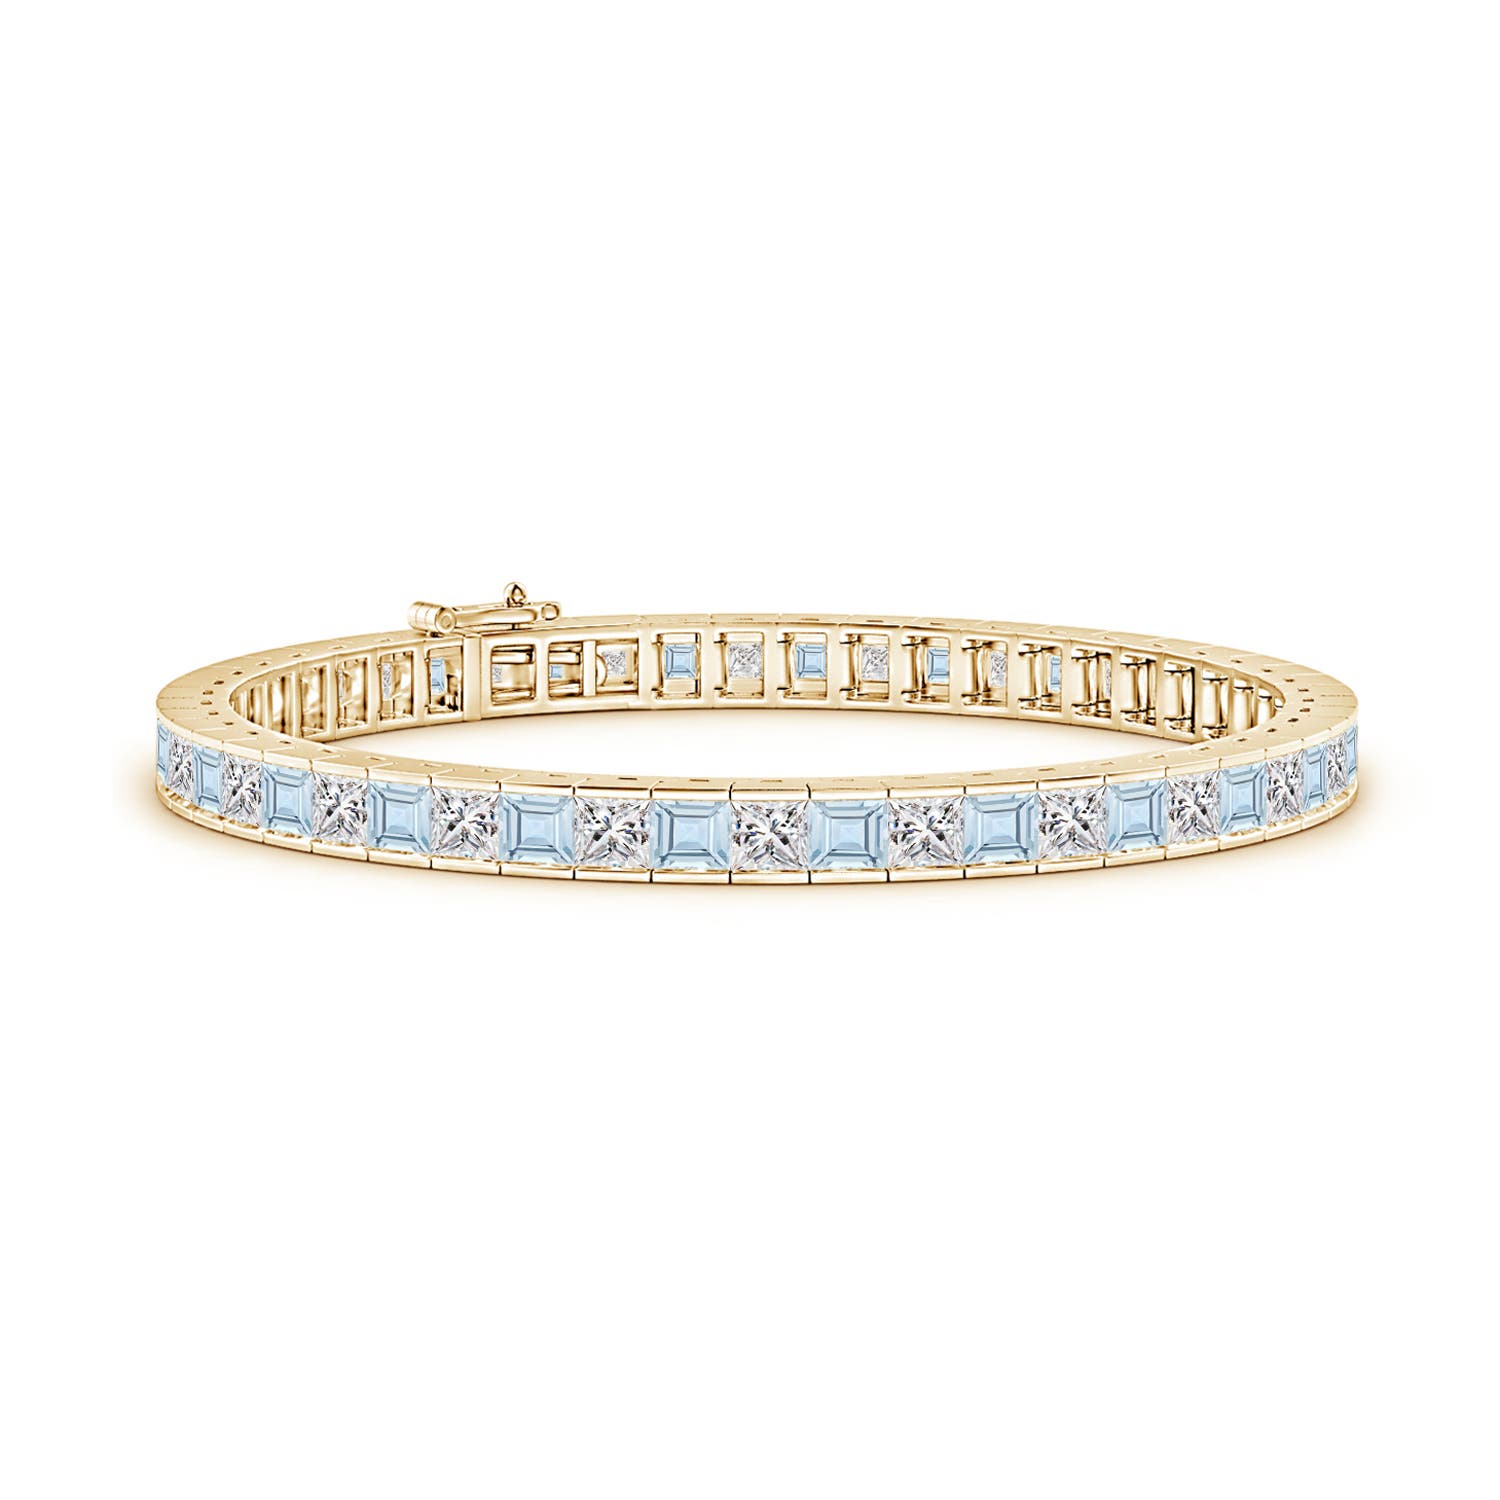 Channel-set square aquamarine and diamond angara tennis bracelet